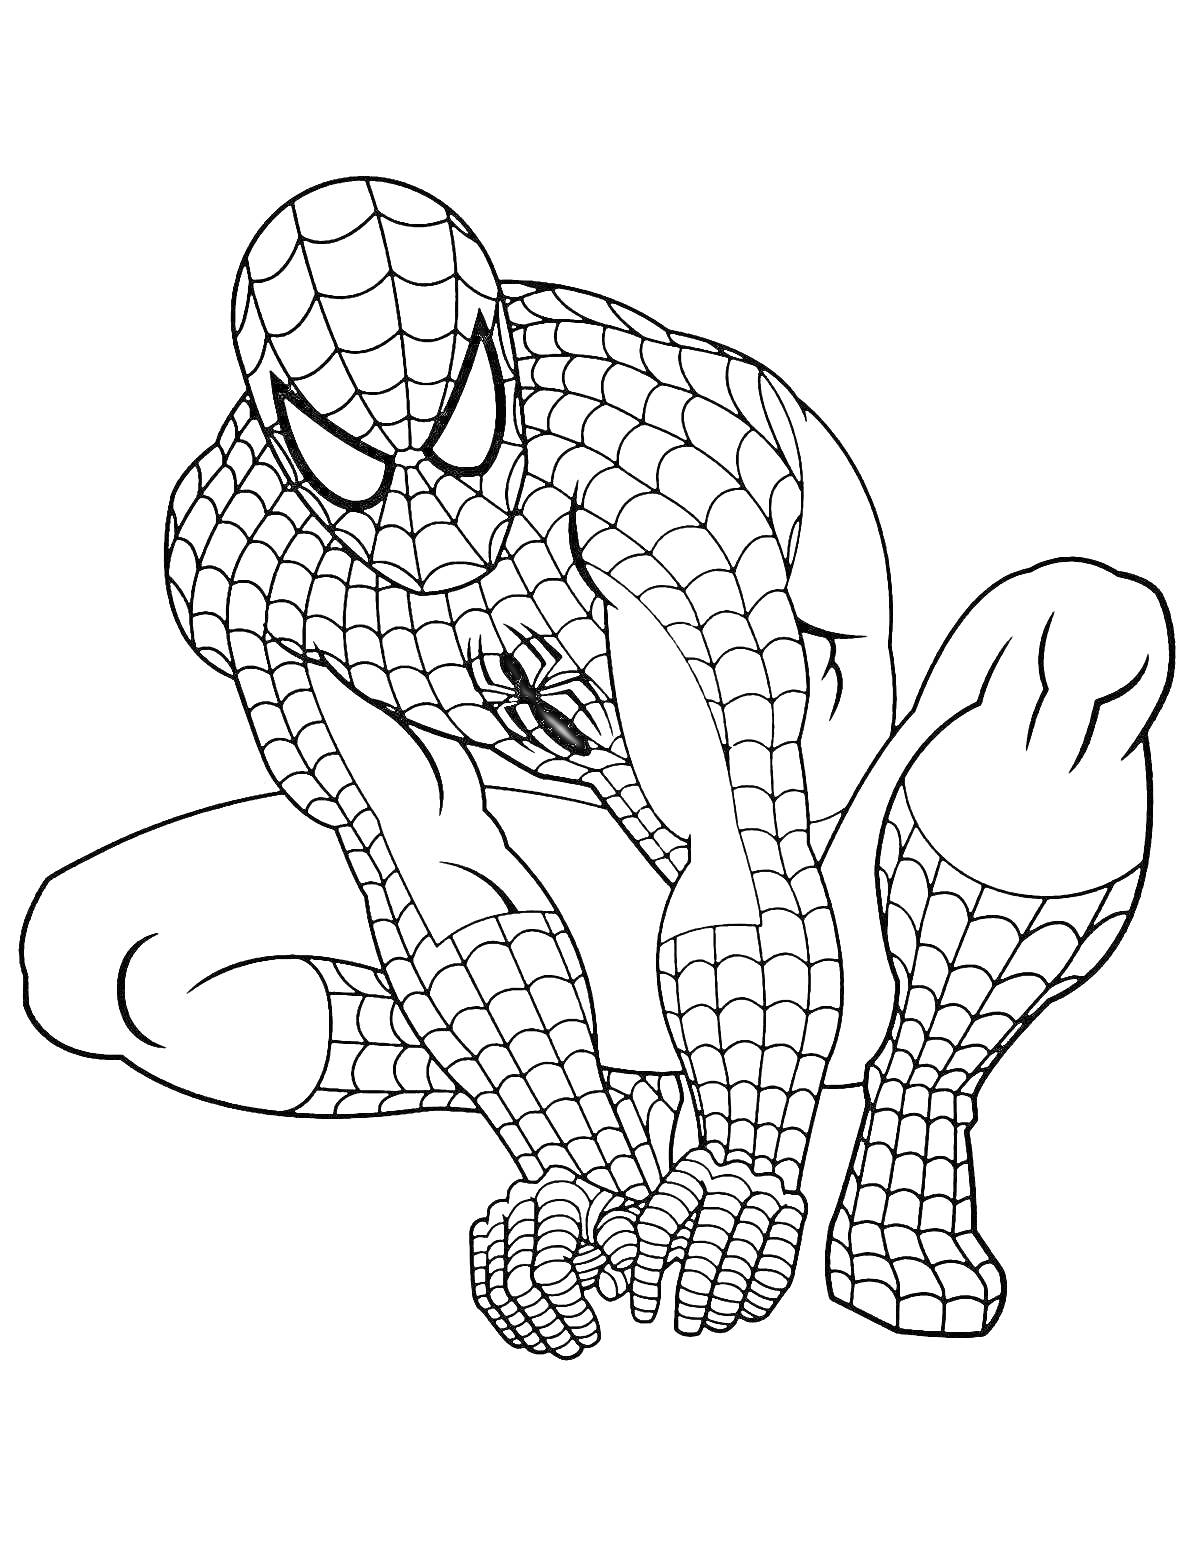 Раскраска Человек-паук в костюме, сидящий на корточках, с паутиной на костюме